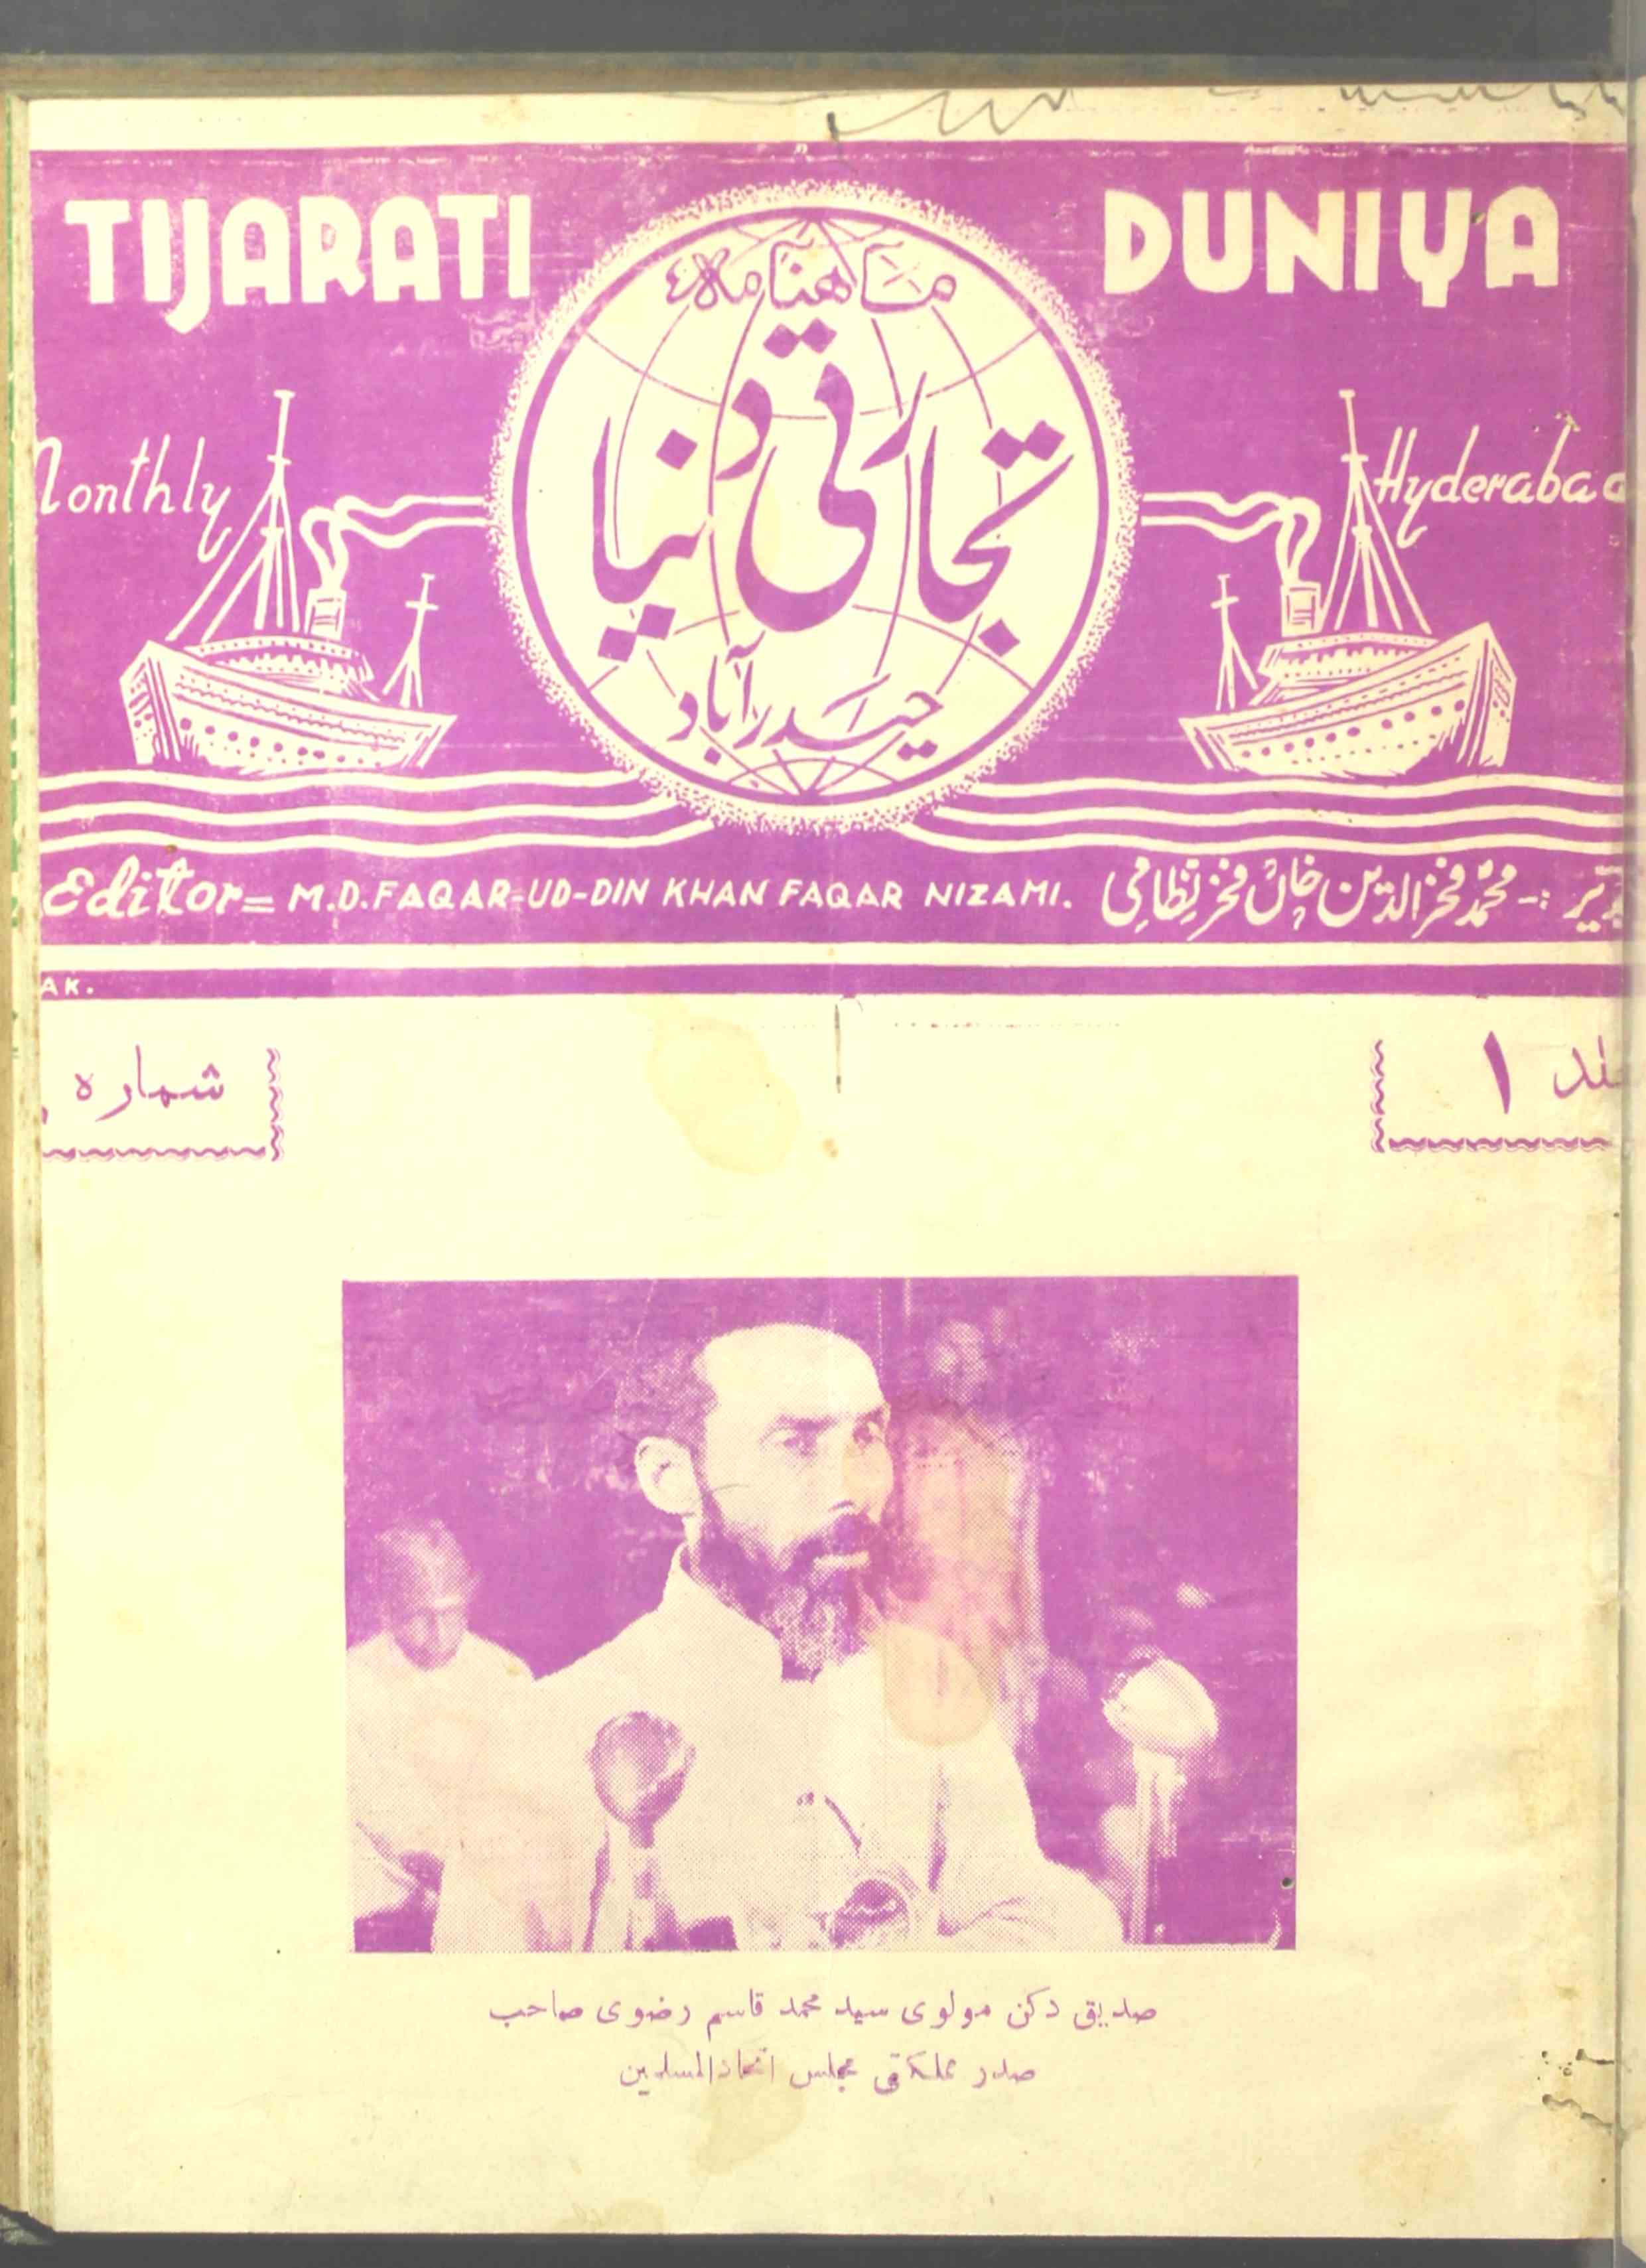 Tijarati Duniya Jild 1 No 9 March 1948